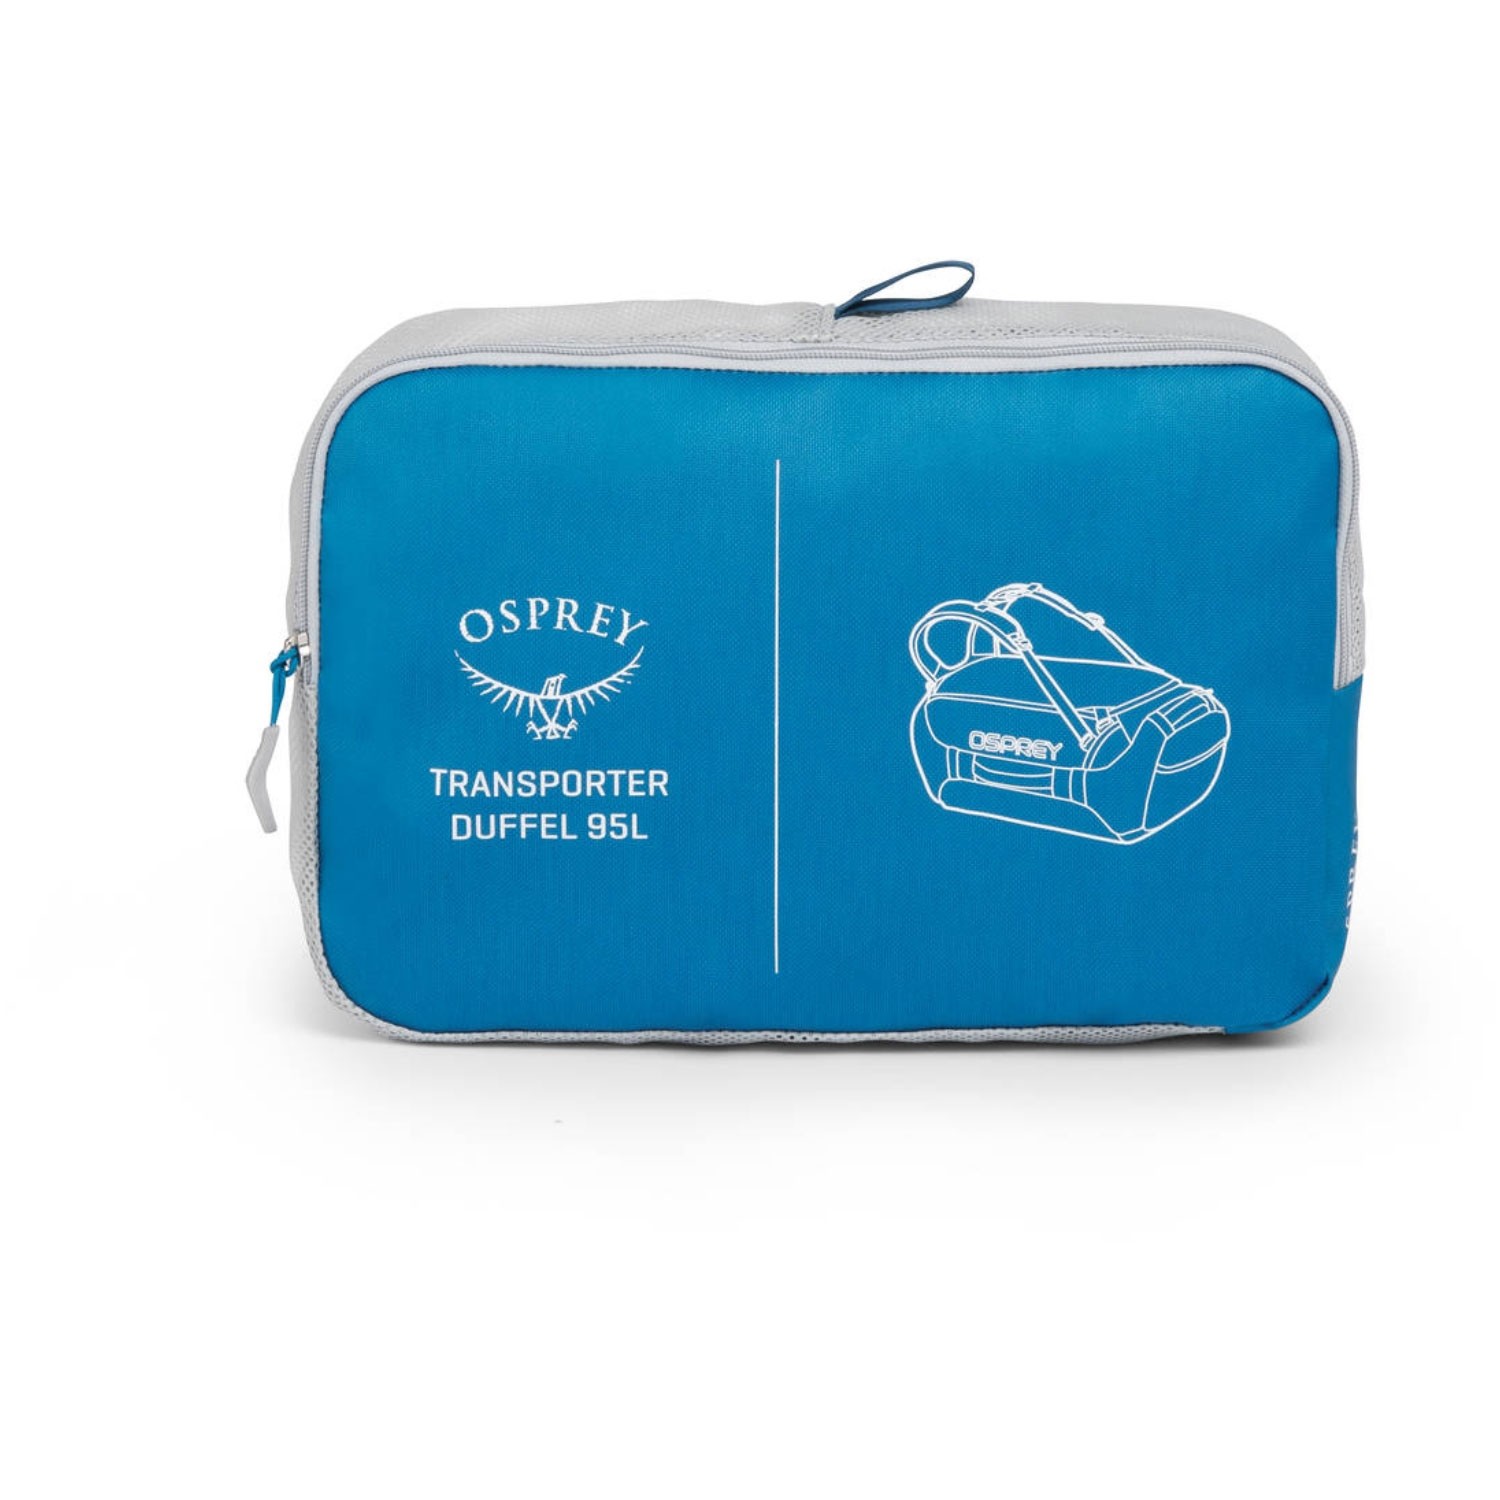 Osprey Transporter 95 Duffle Bag - Kingfisher Blue